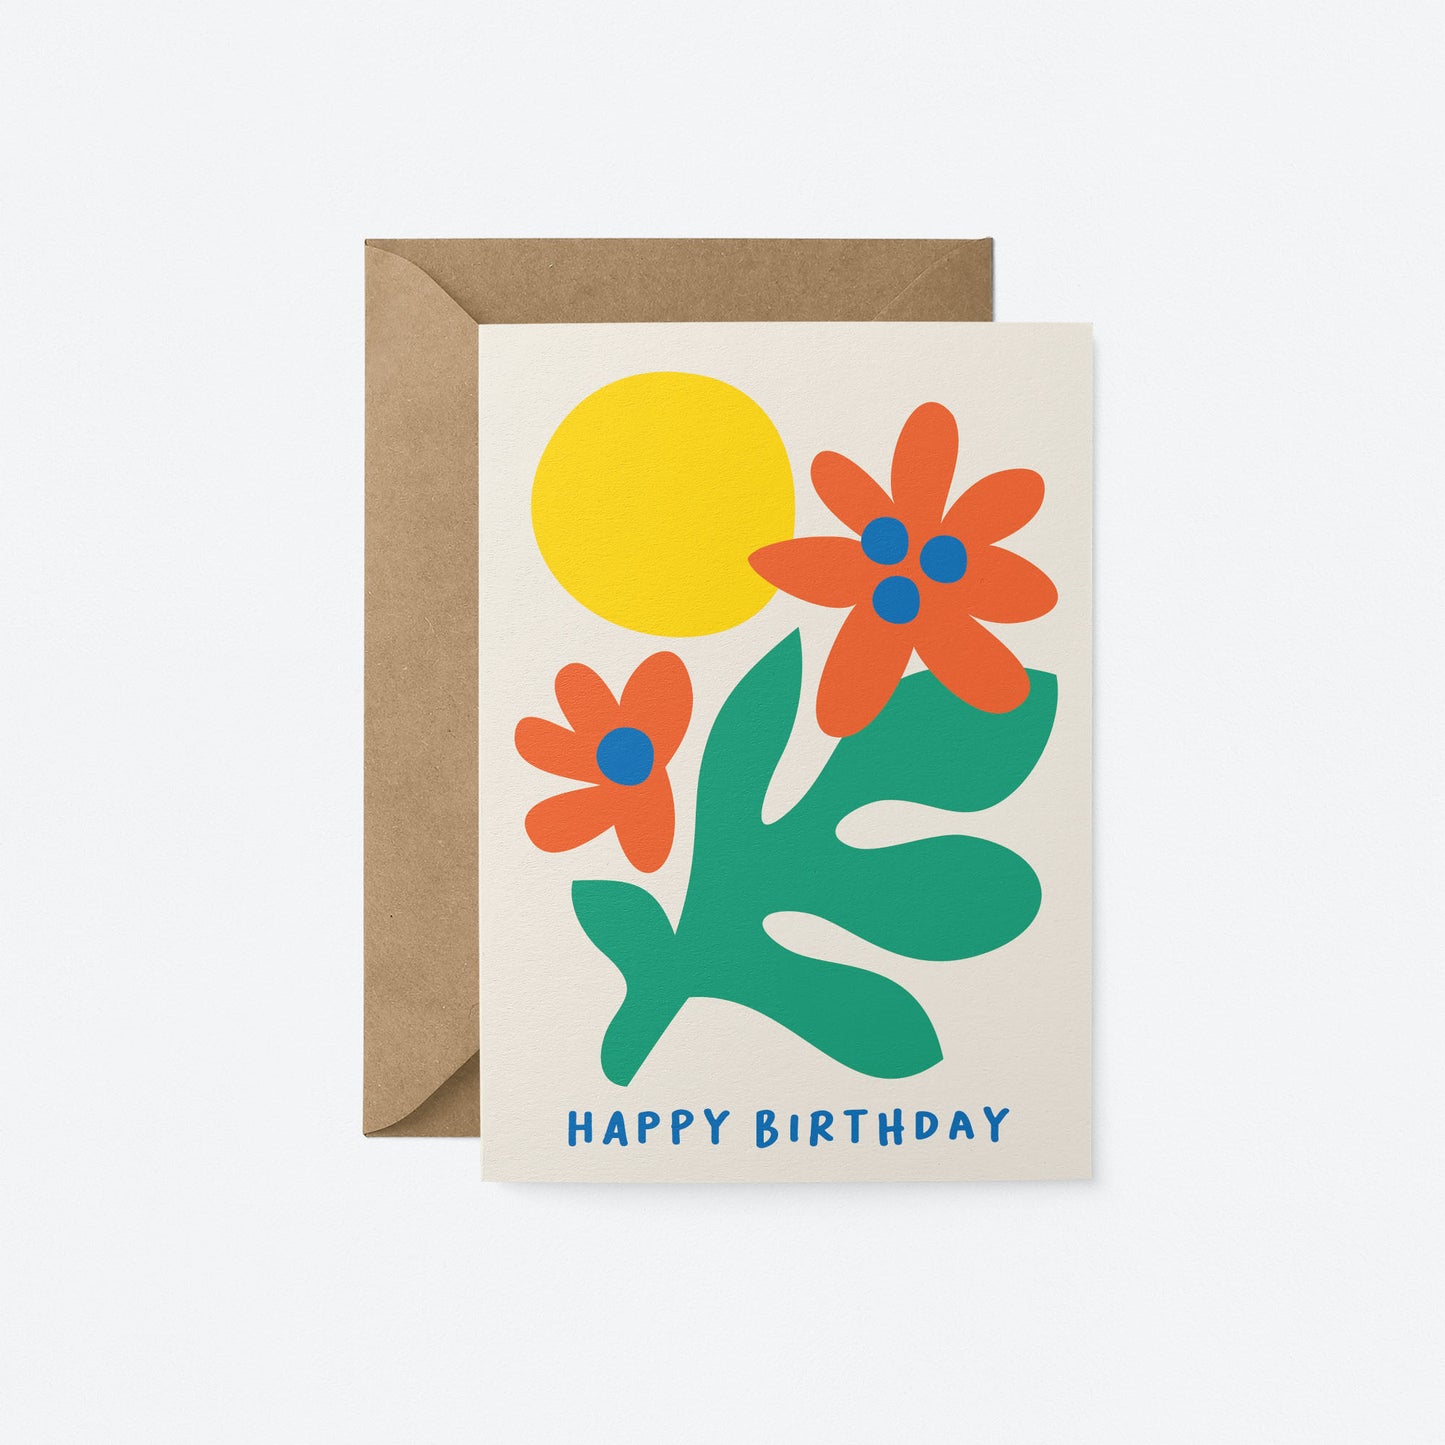 Happy Birthday - Sun and Flower Greetings Card